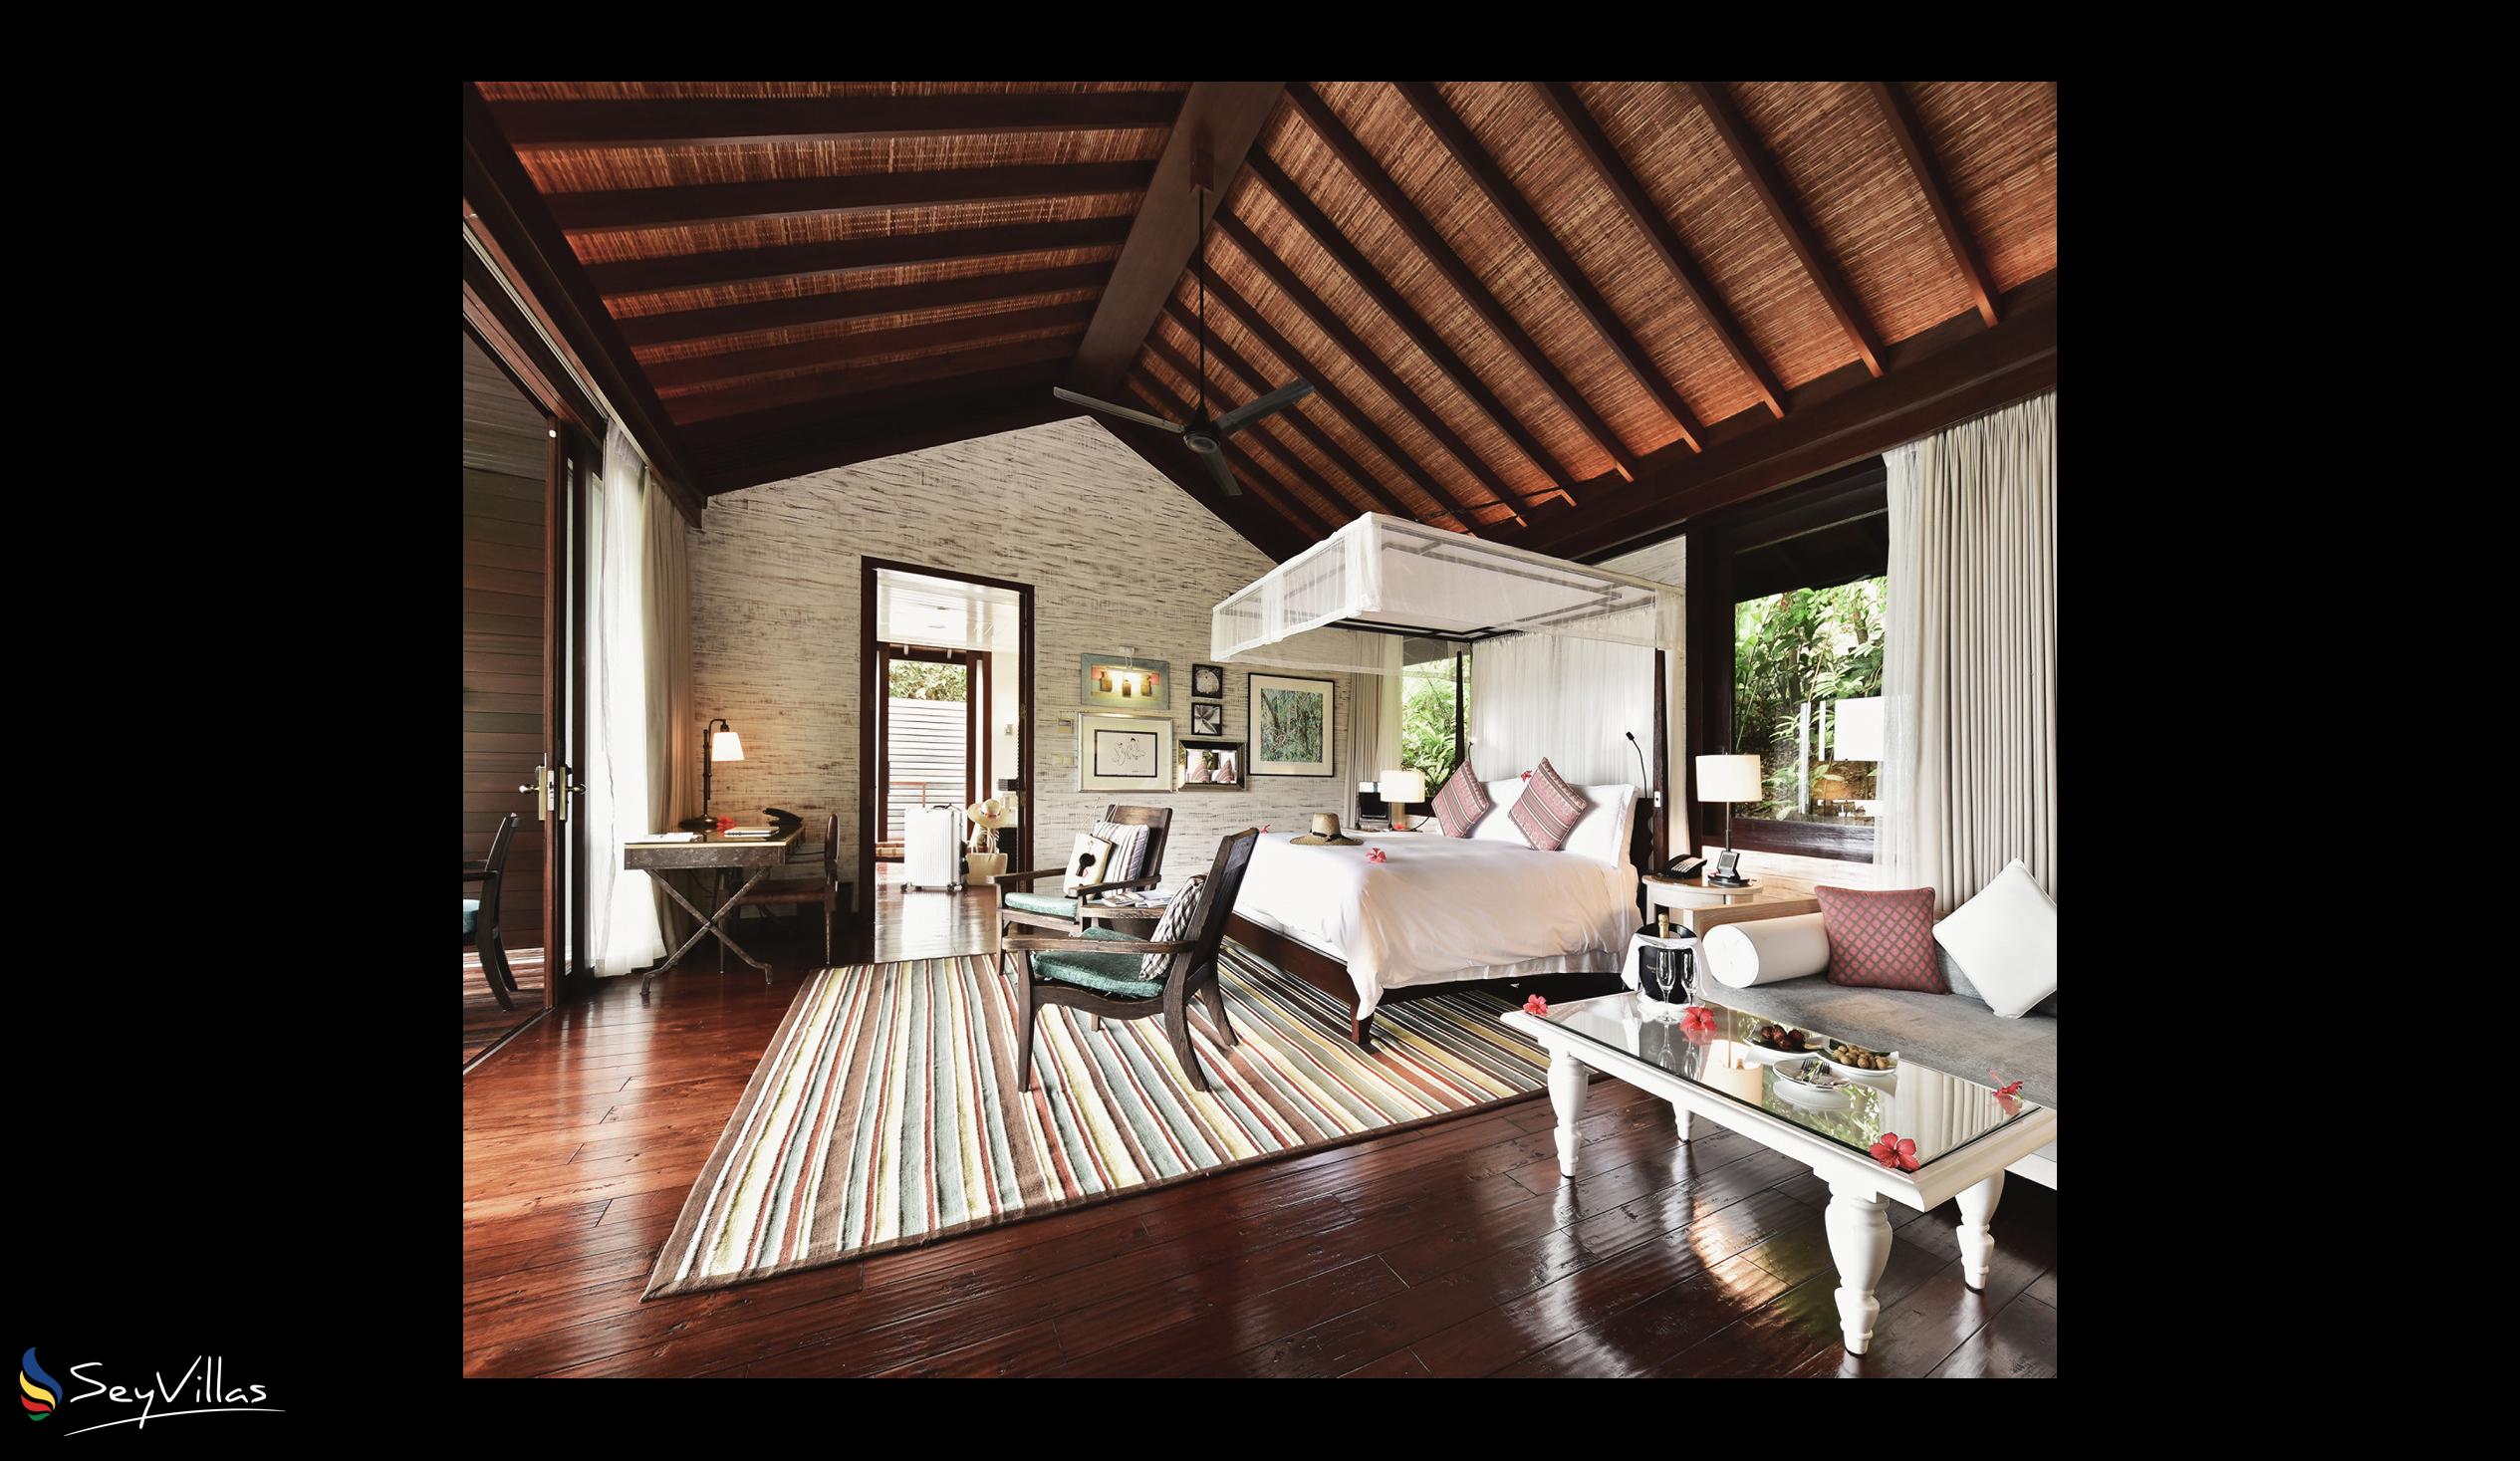 Foto 23: Four Seasons Resort - 2-Bedroom Hilltop Ocean View Suite - Mahé (Seychelles)